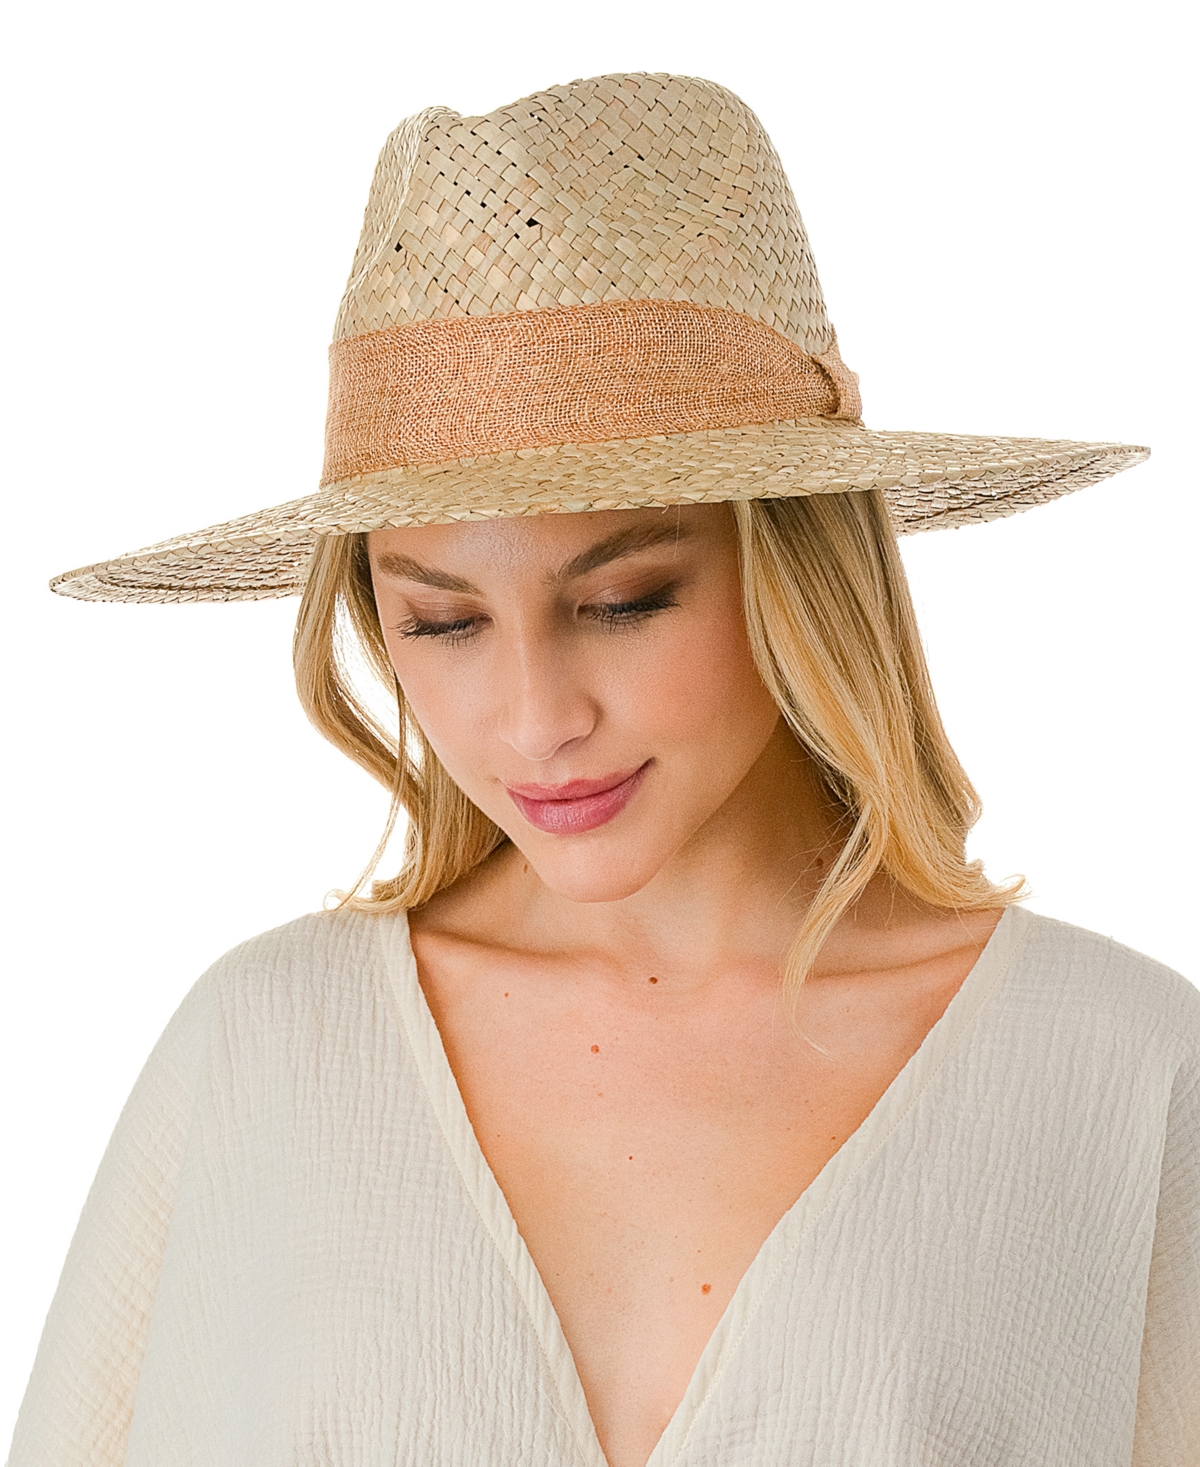 Trim Detail with Straw Panama Hat - Tan